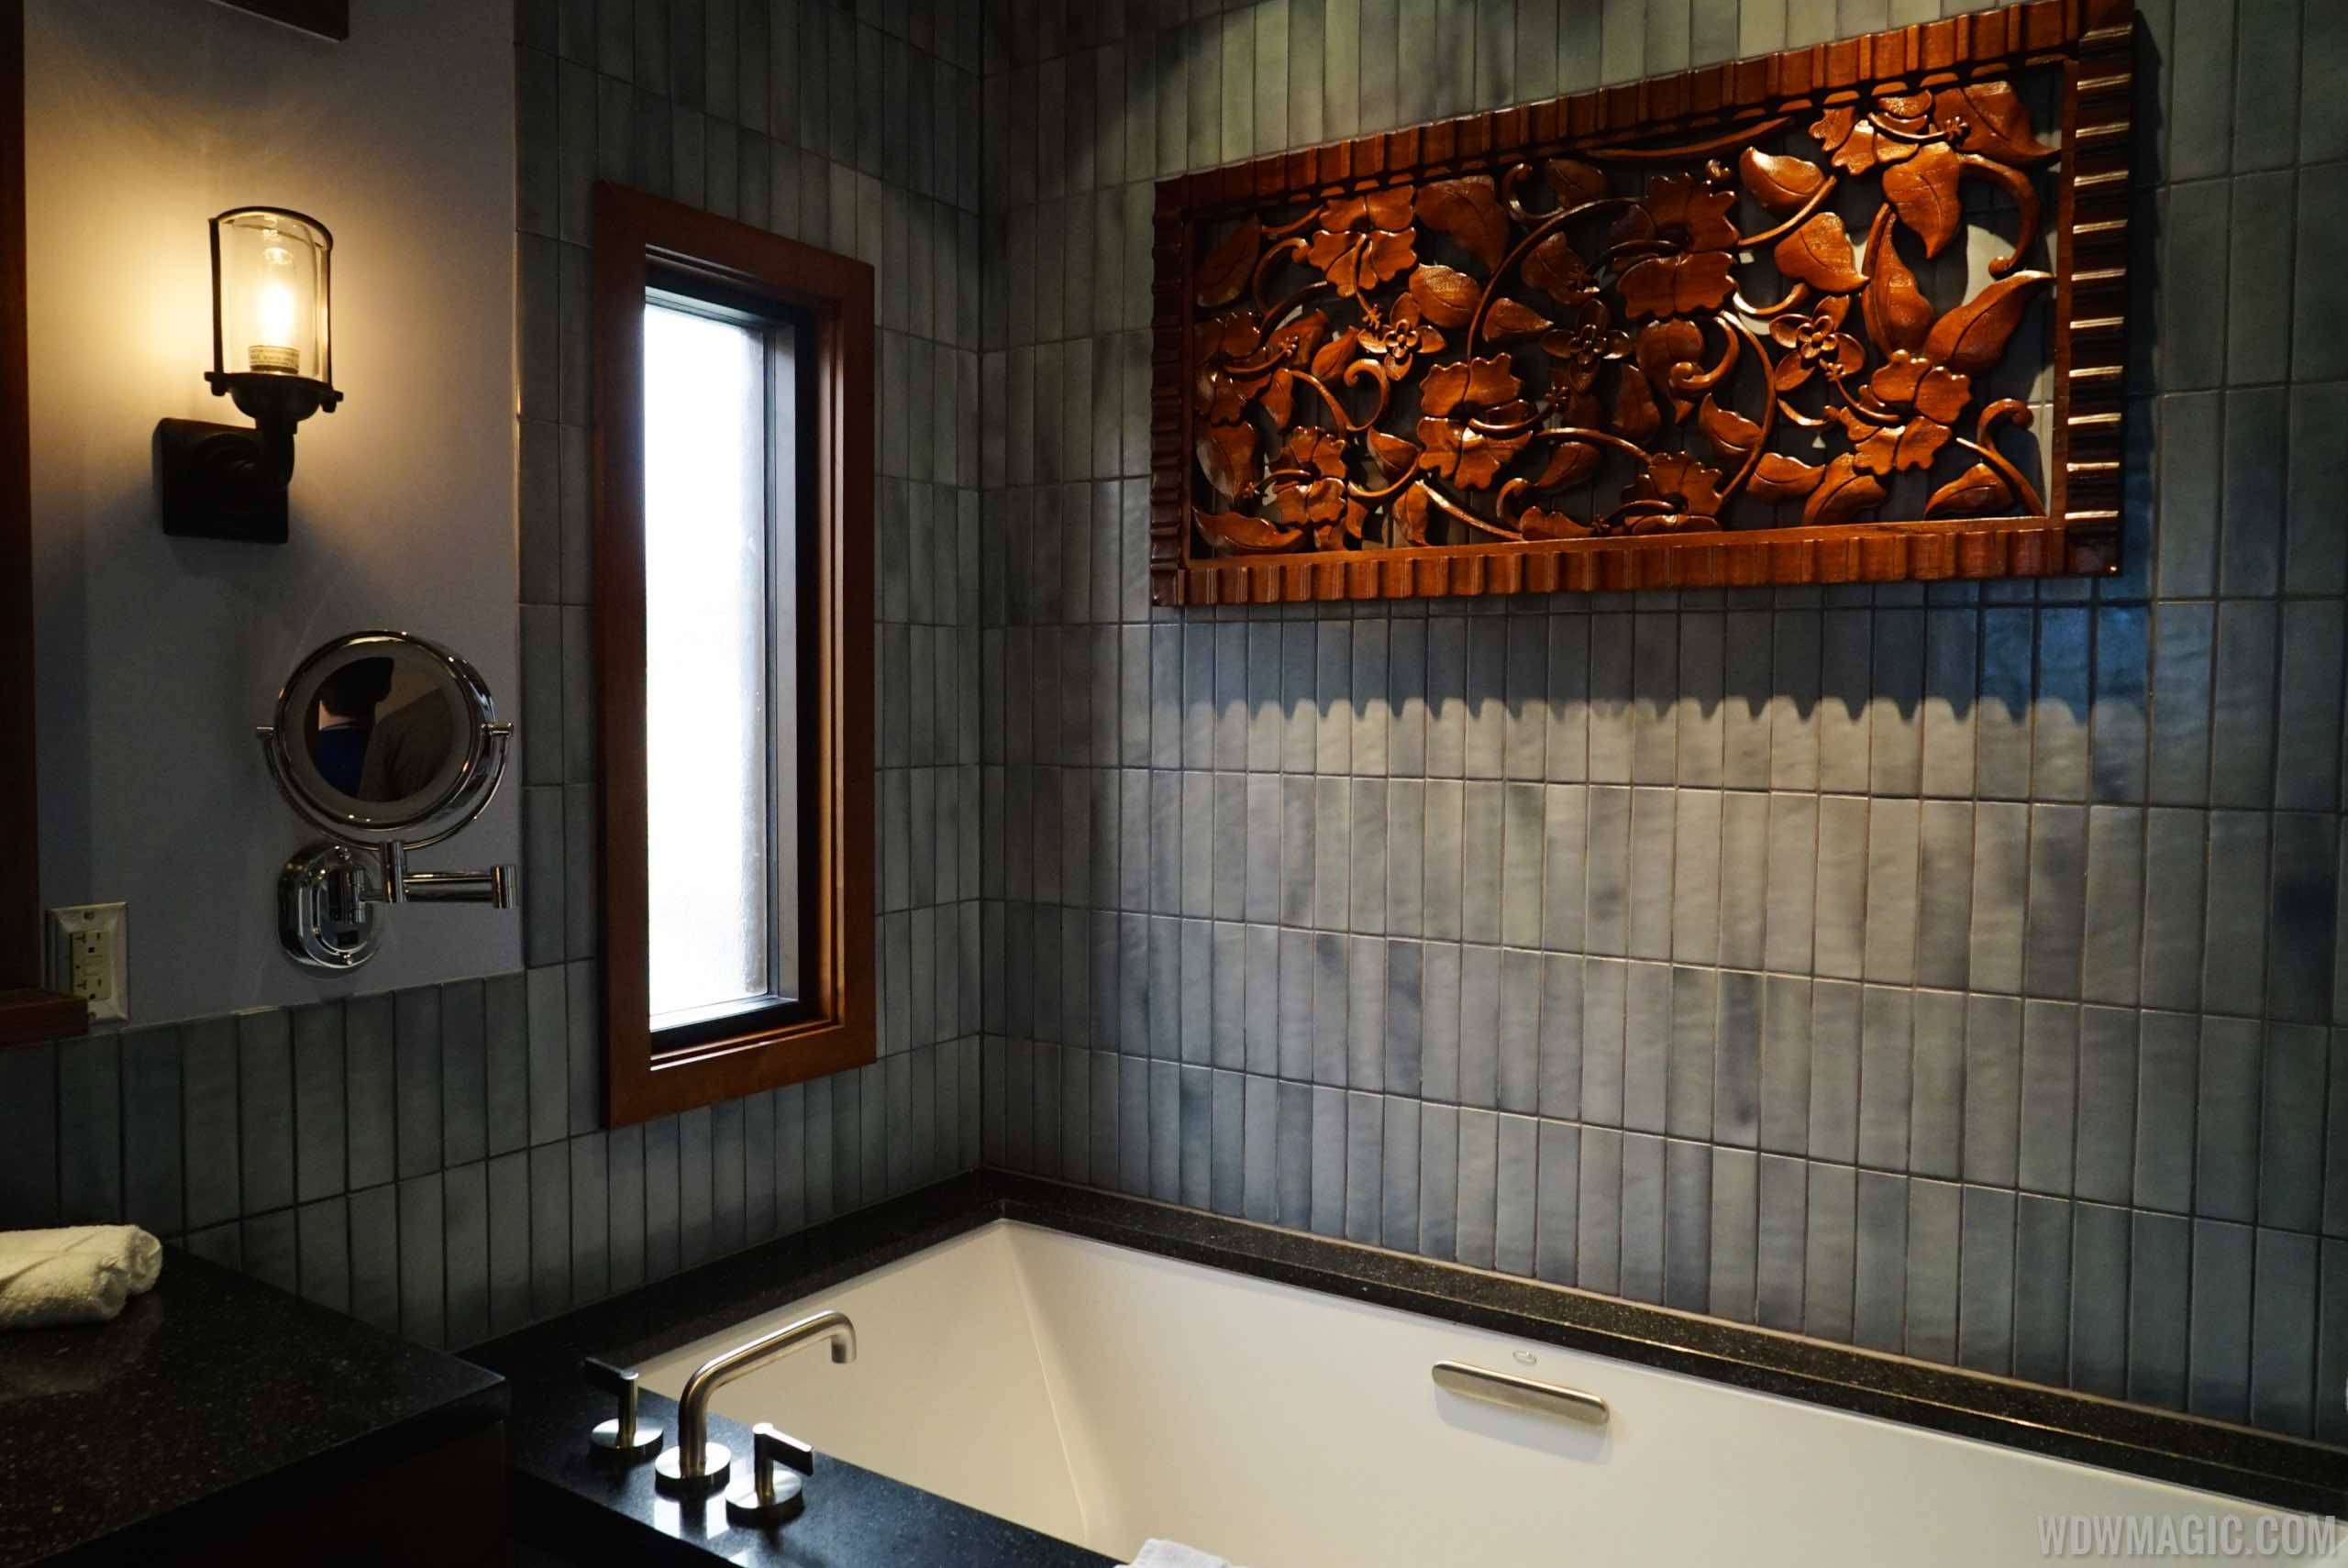 Disney's Polynesian Village Resort Bora Bora Bungalow - Jetted tub in master bathroom